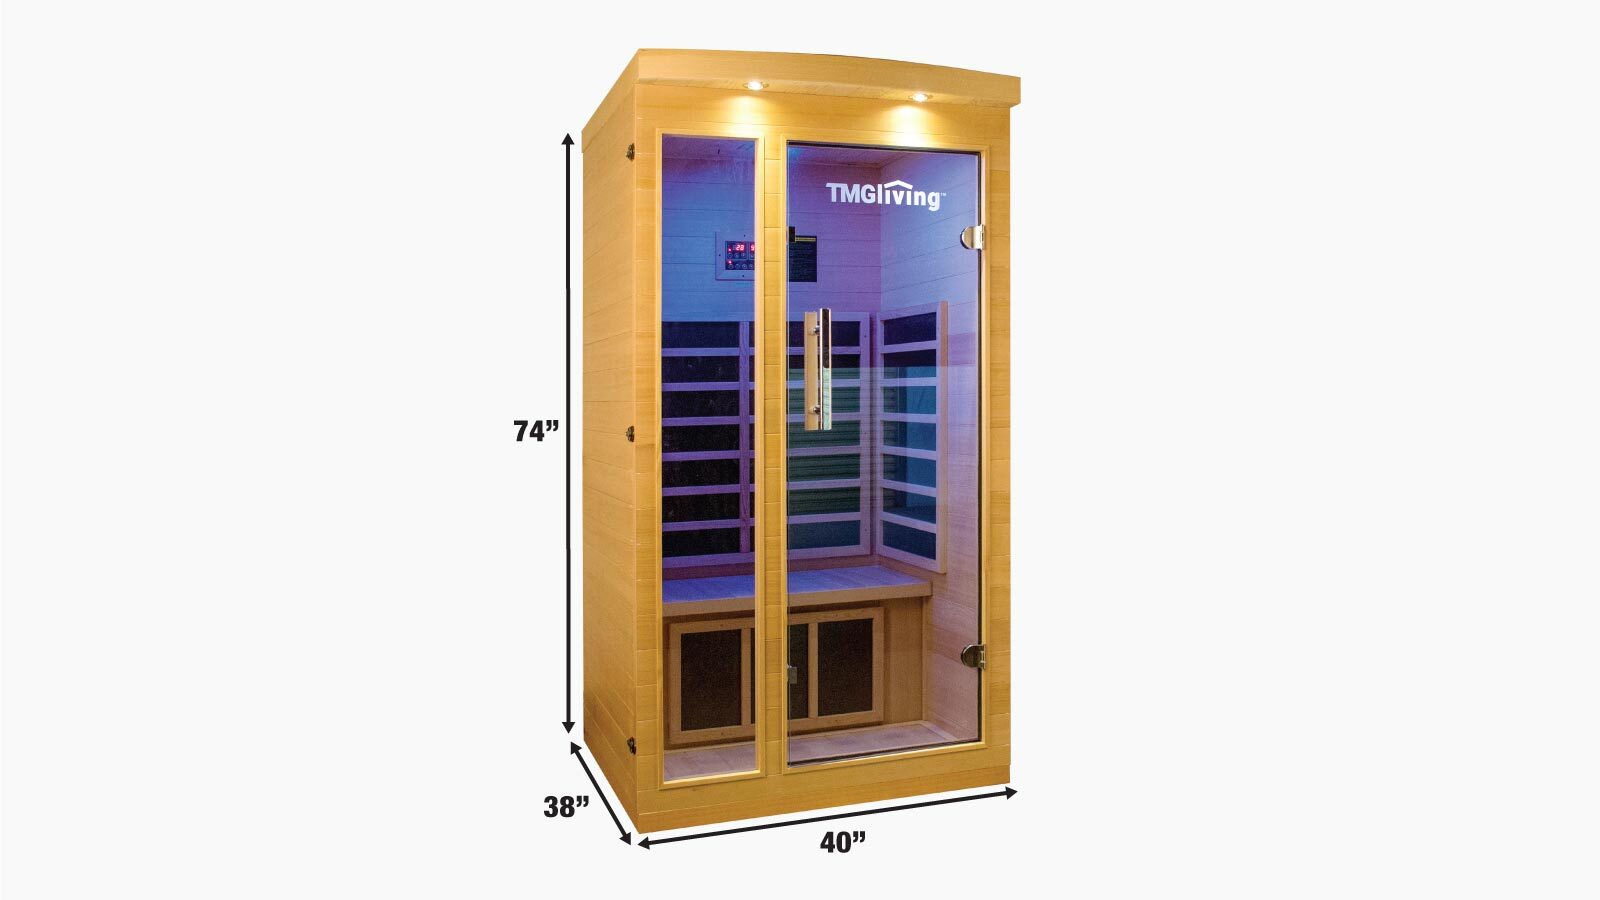 TMG LIVING 1-2 Person Indoor FAR Infrared Room, Natural Canadian Hemlock, Bluetooth Speakers, Tempered Glass Door, TMG-LSN10-specifications-image